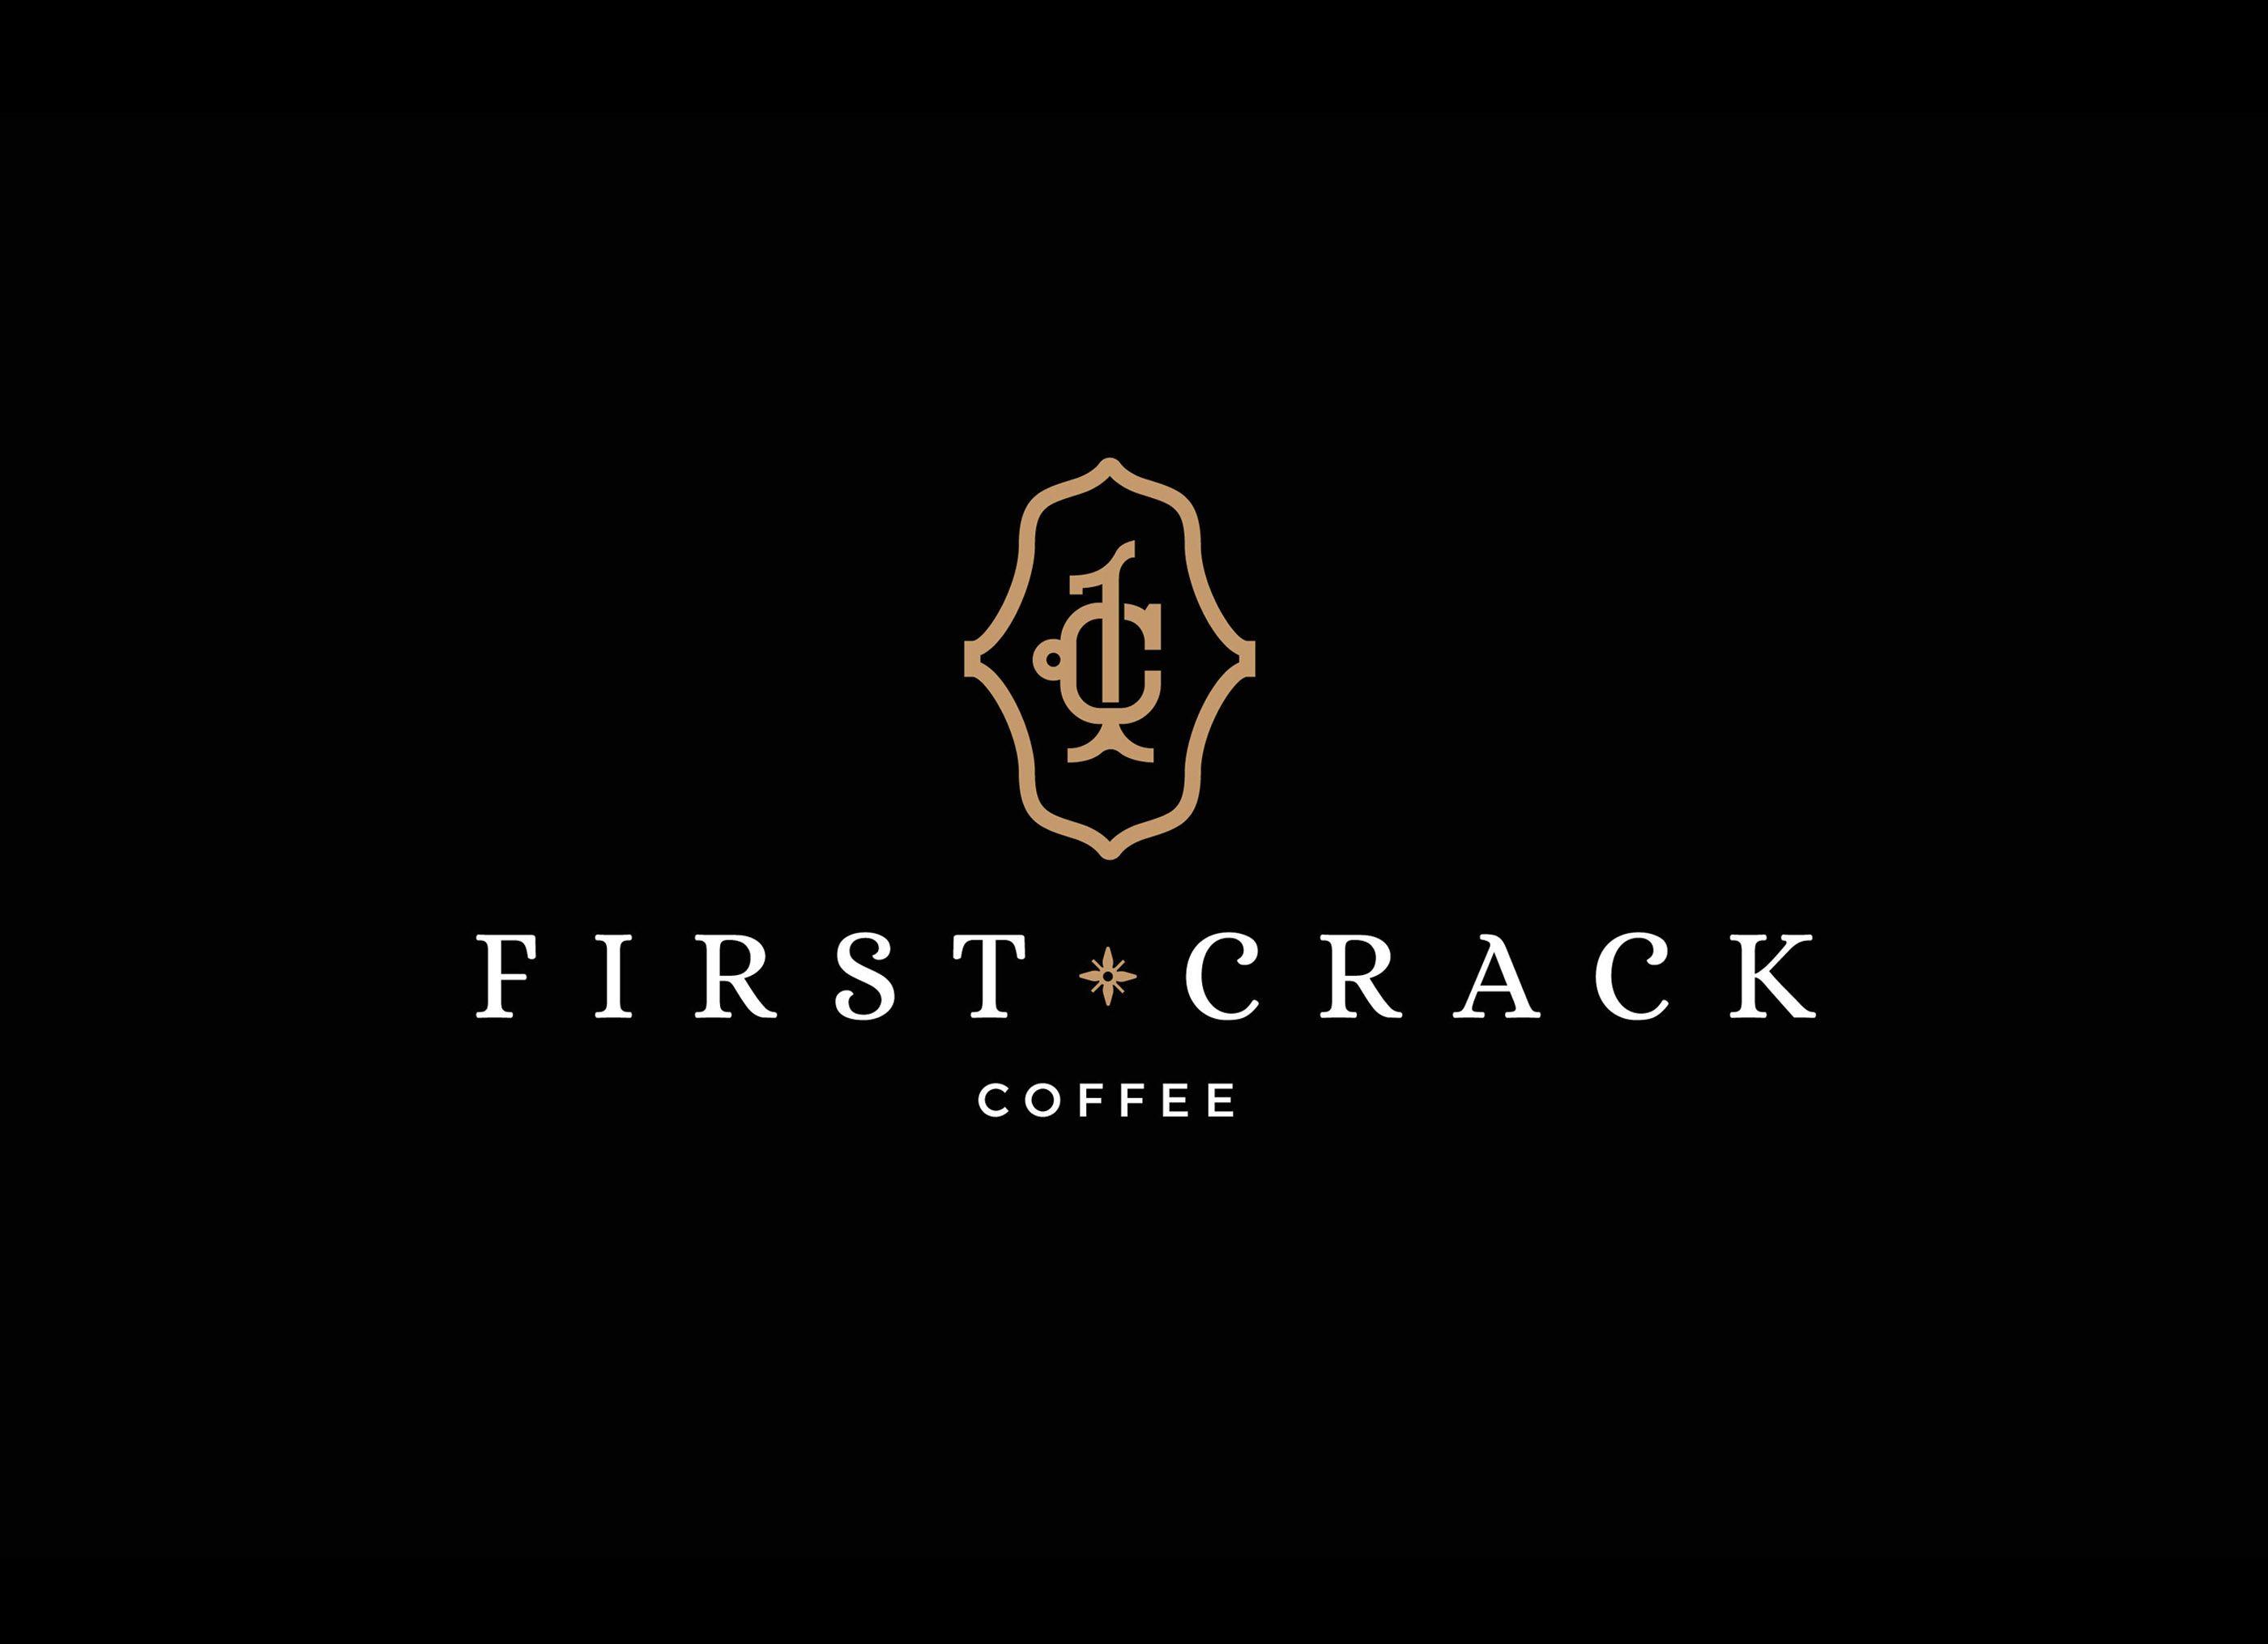 Crack Logo - First Crack Coffee. Logos, Fonts, & Typography. Coffee logo